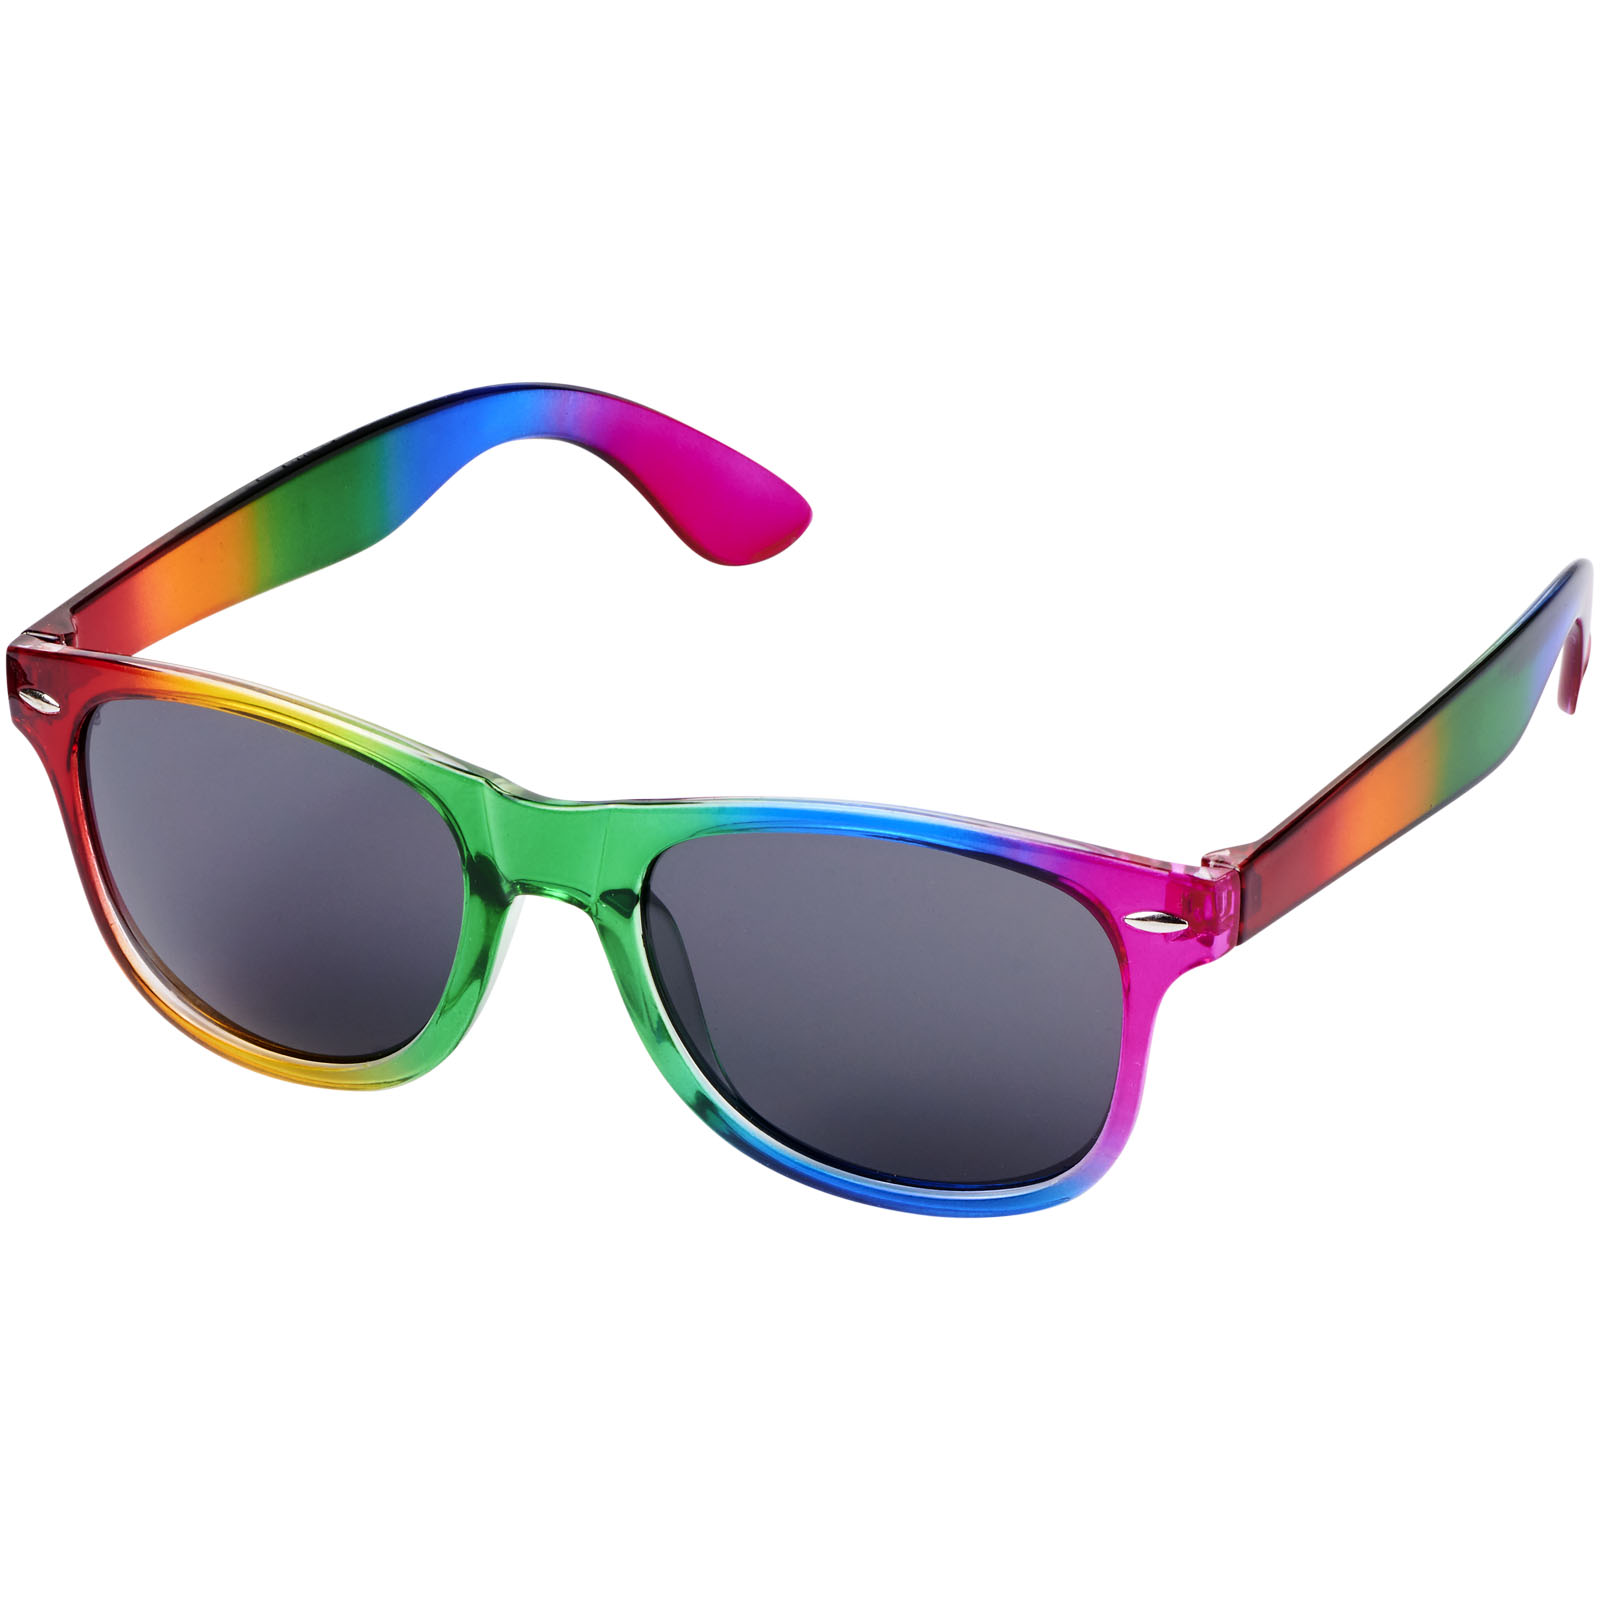 Advertising Sunglasses - Sun Ray rainbow sunglasses - 0